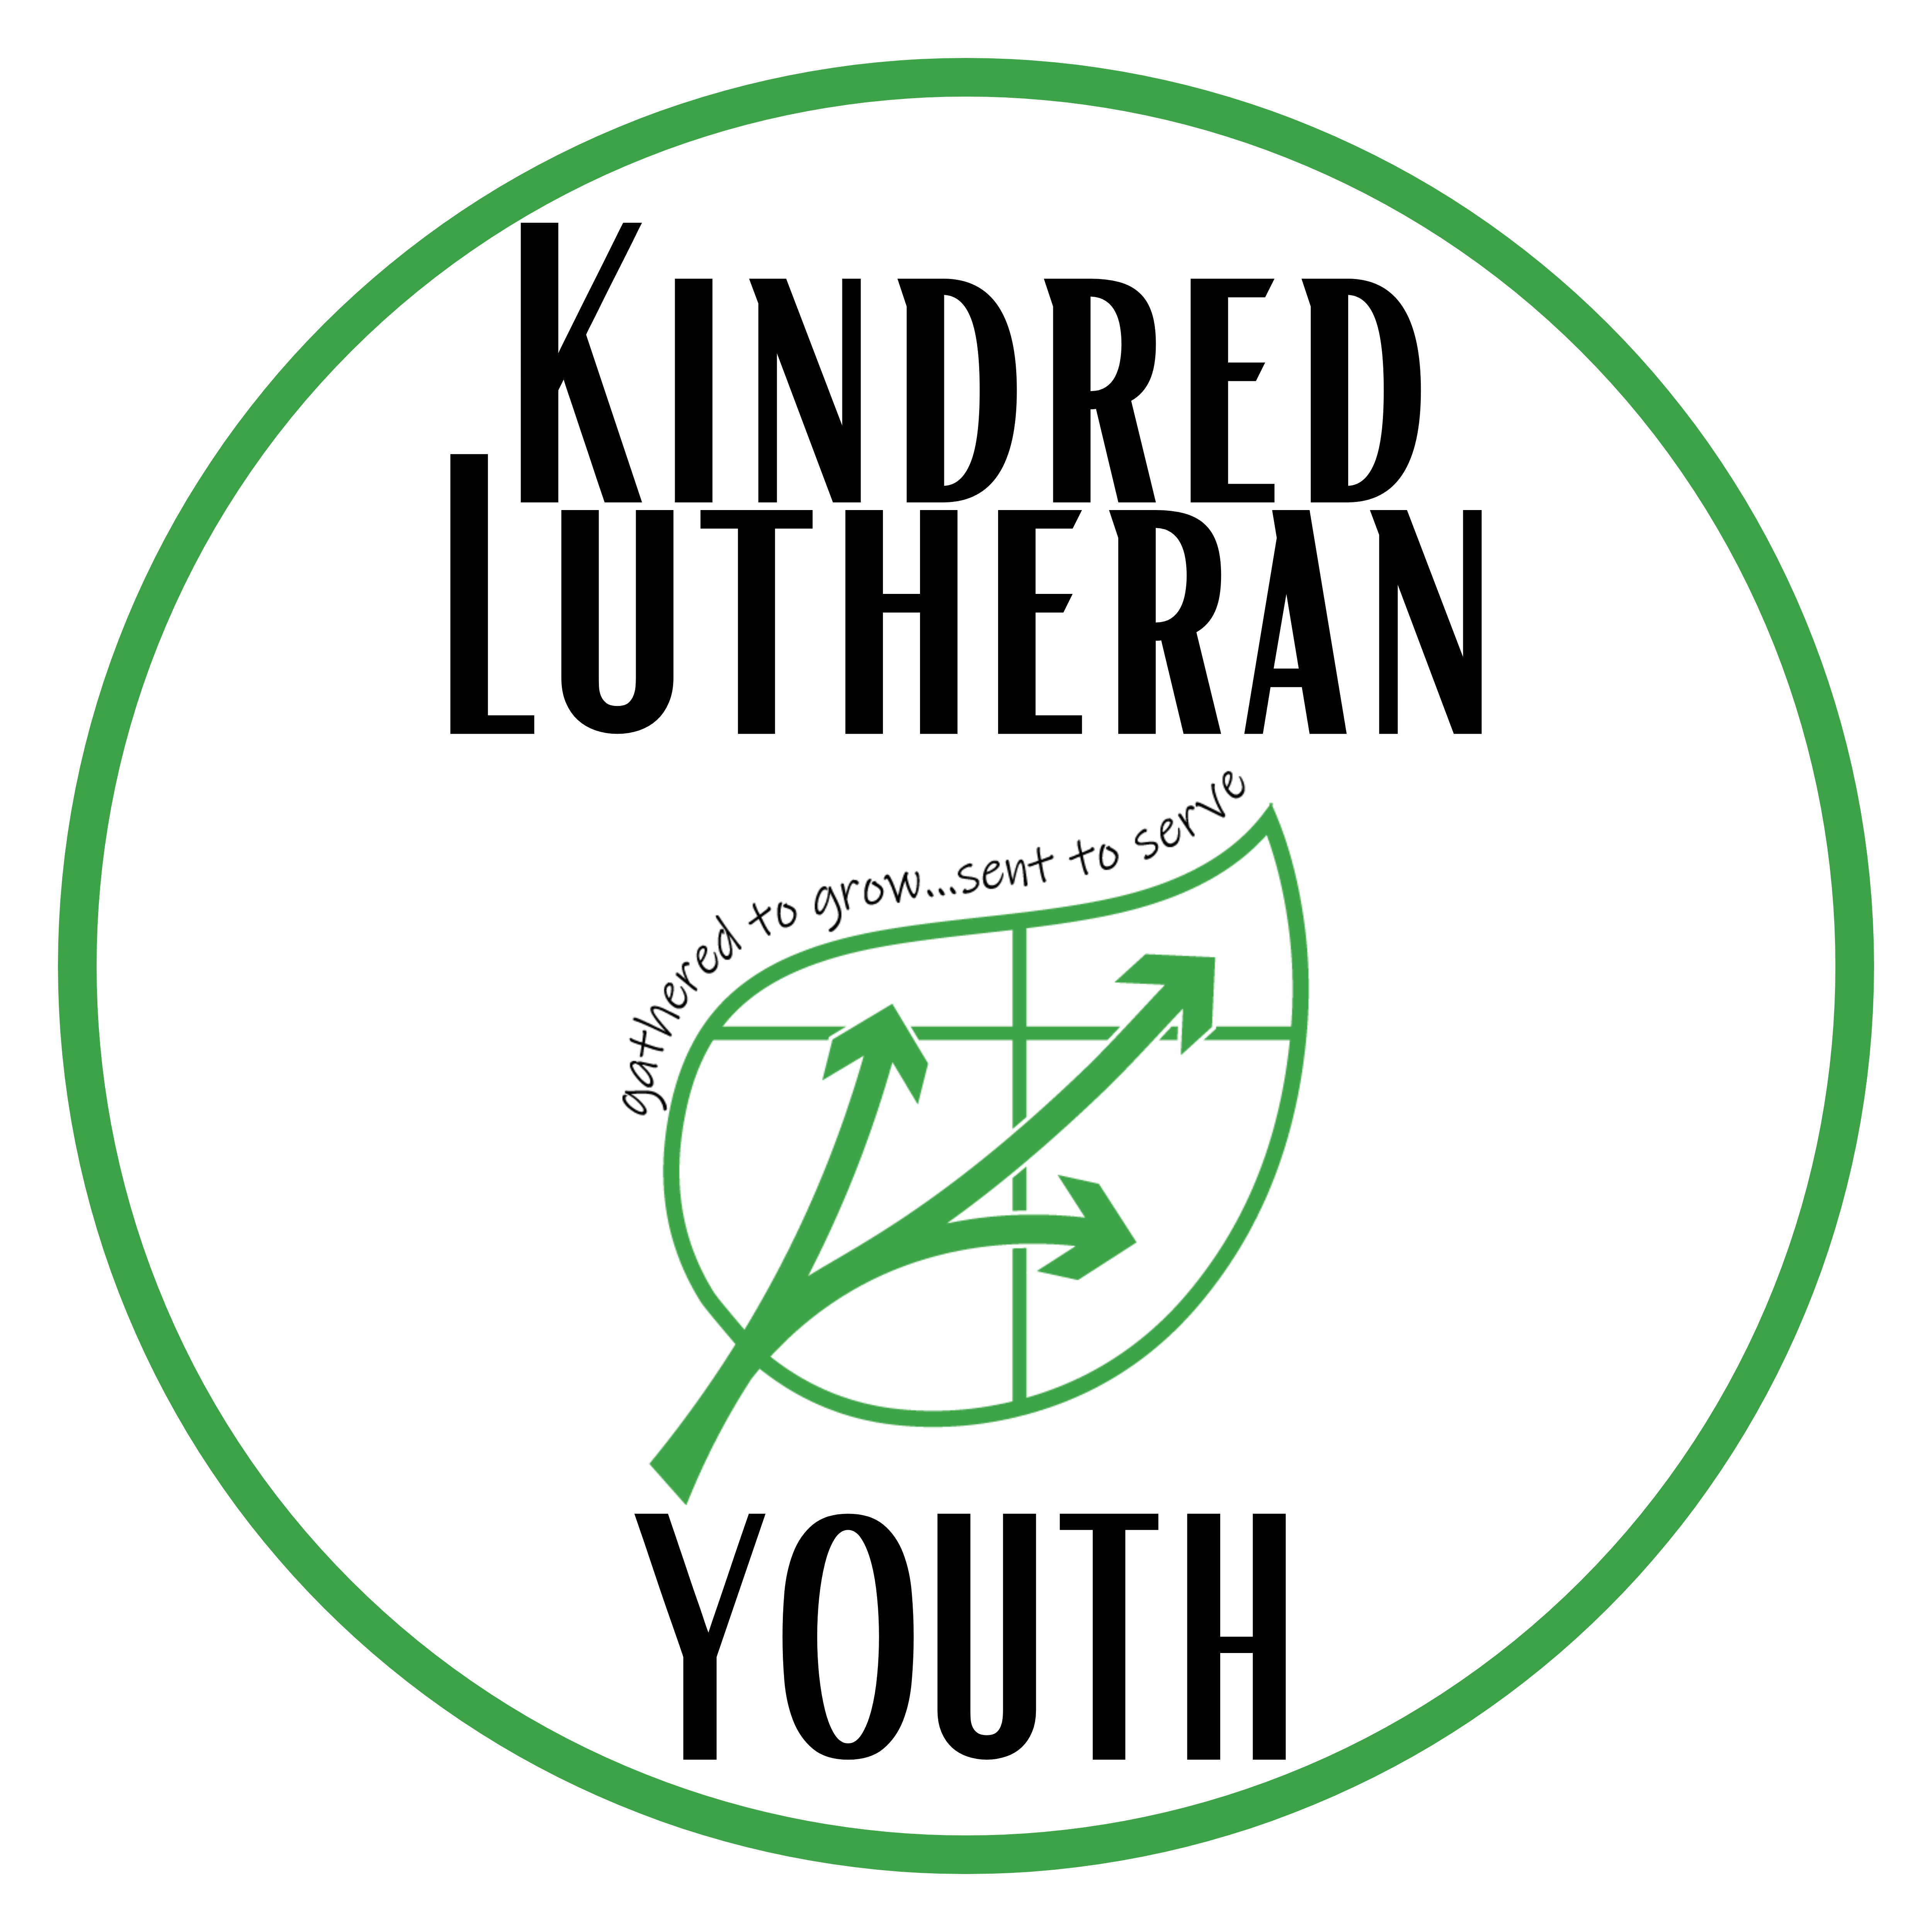 KLC Youth